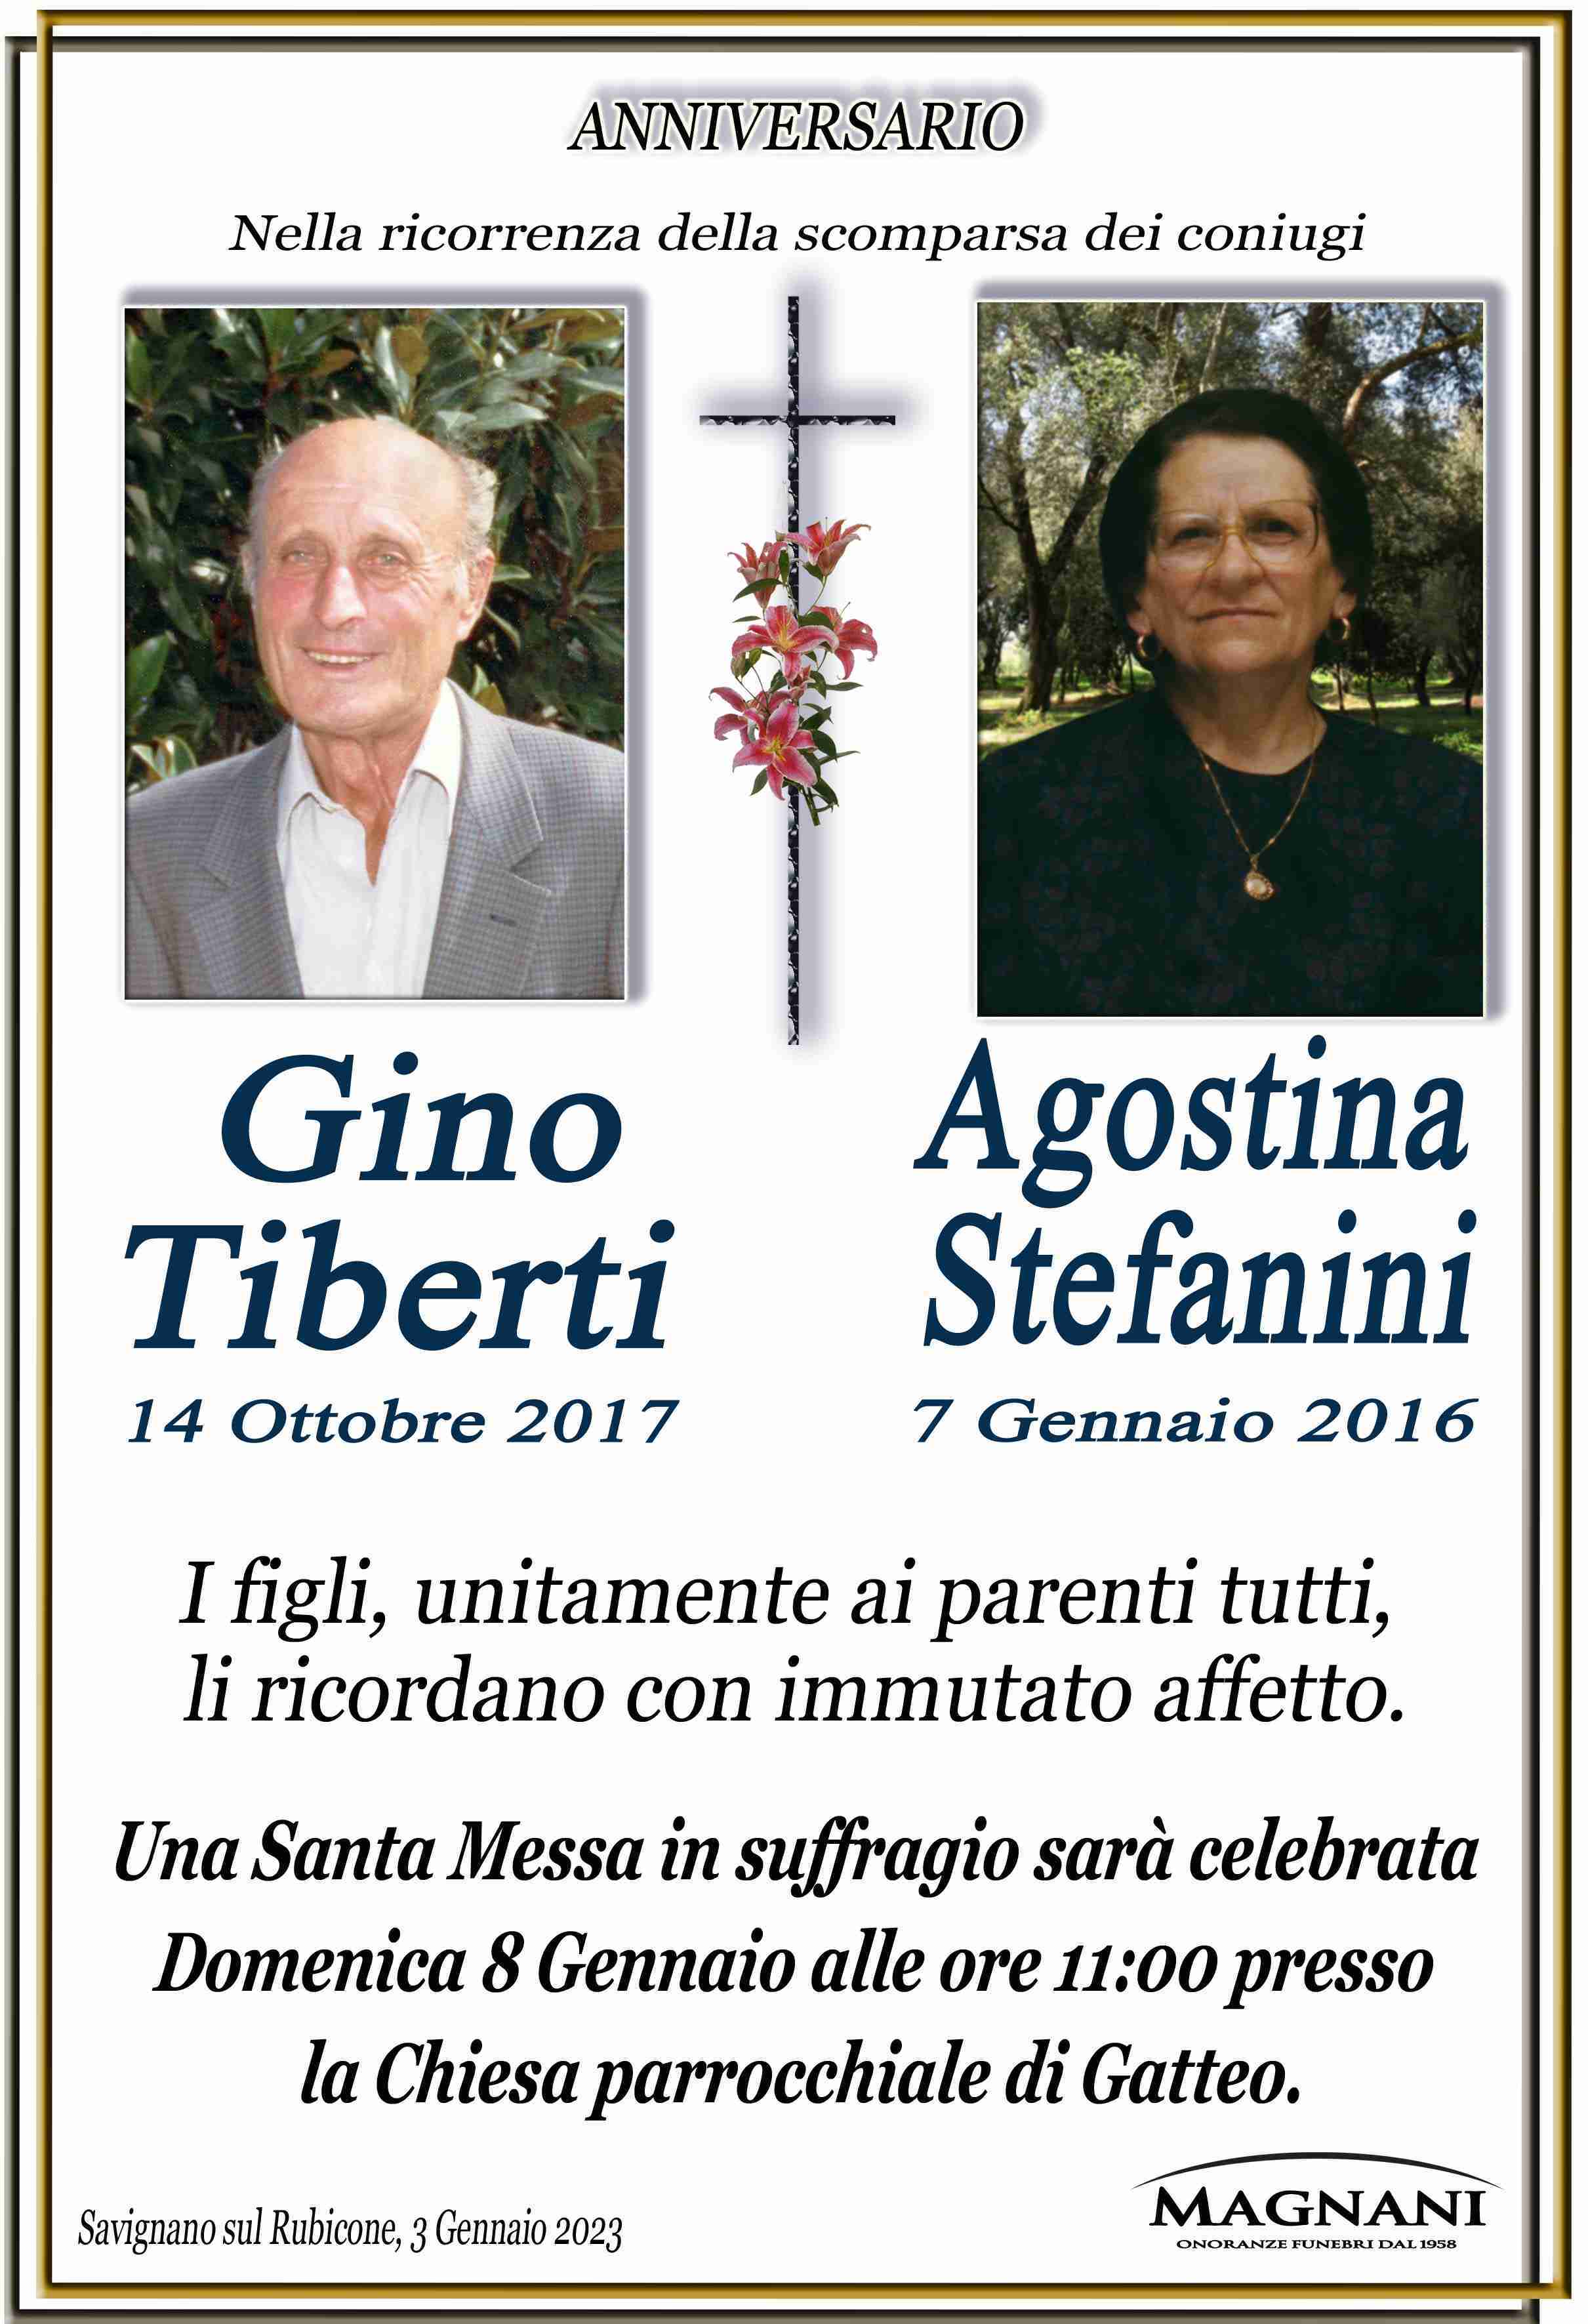 Gino Tiberti e Agostina Stefanini